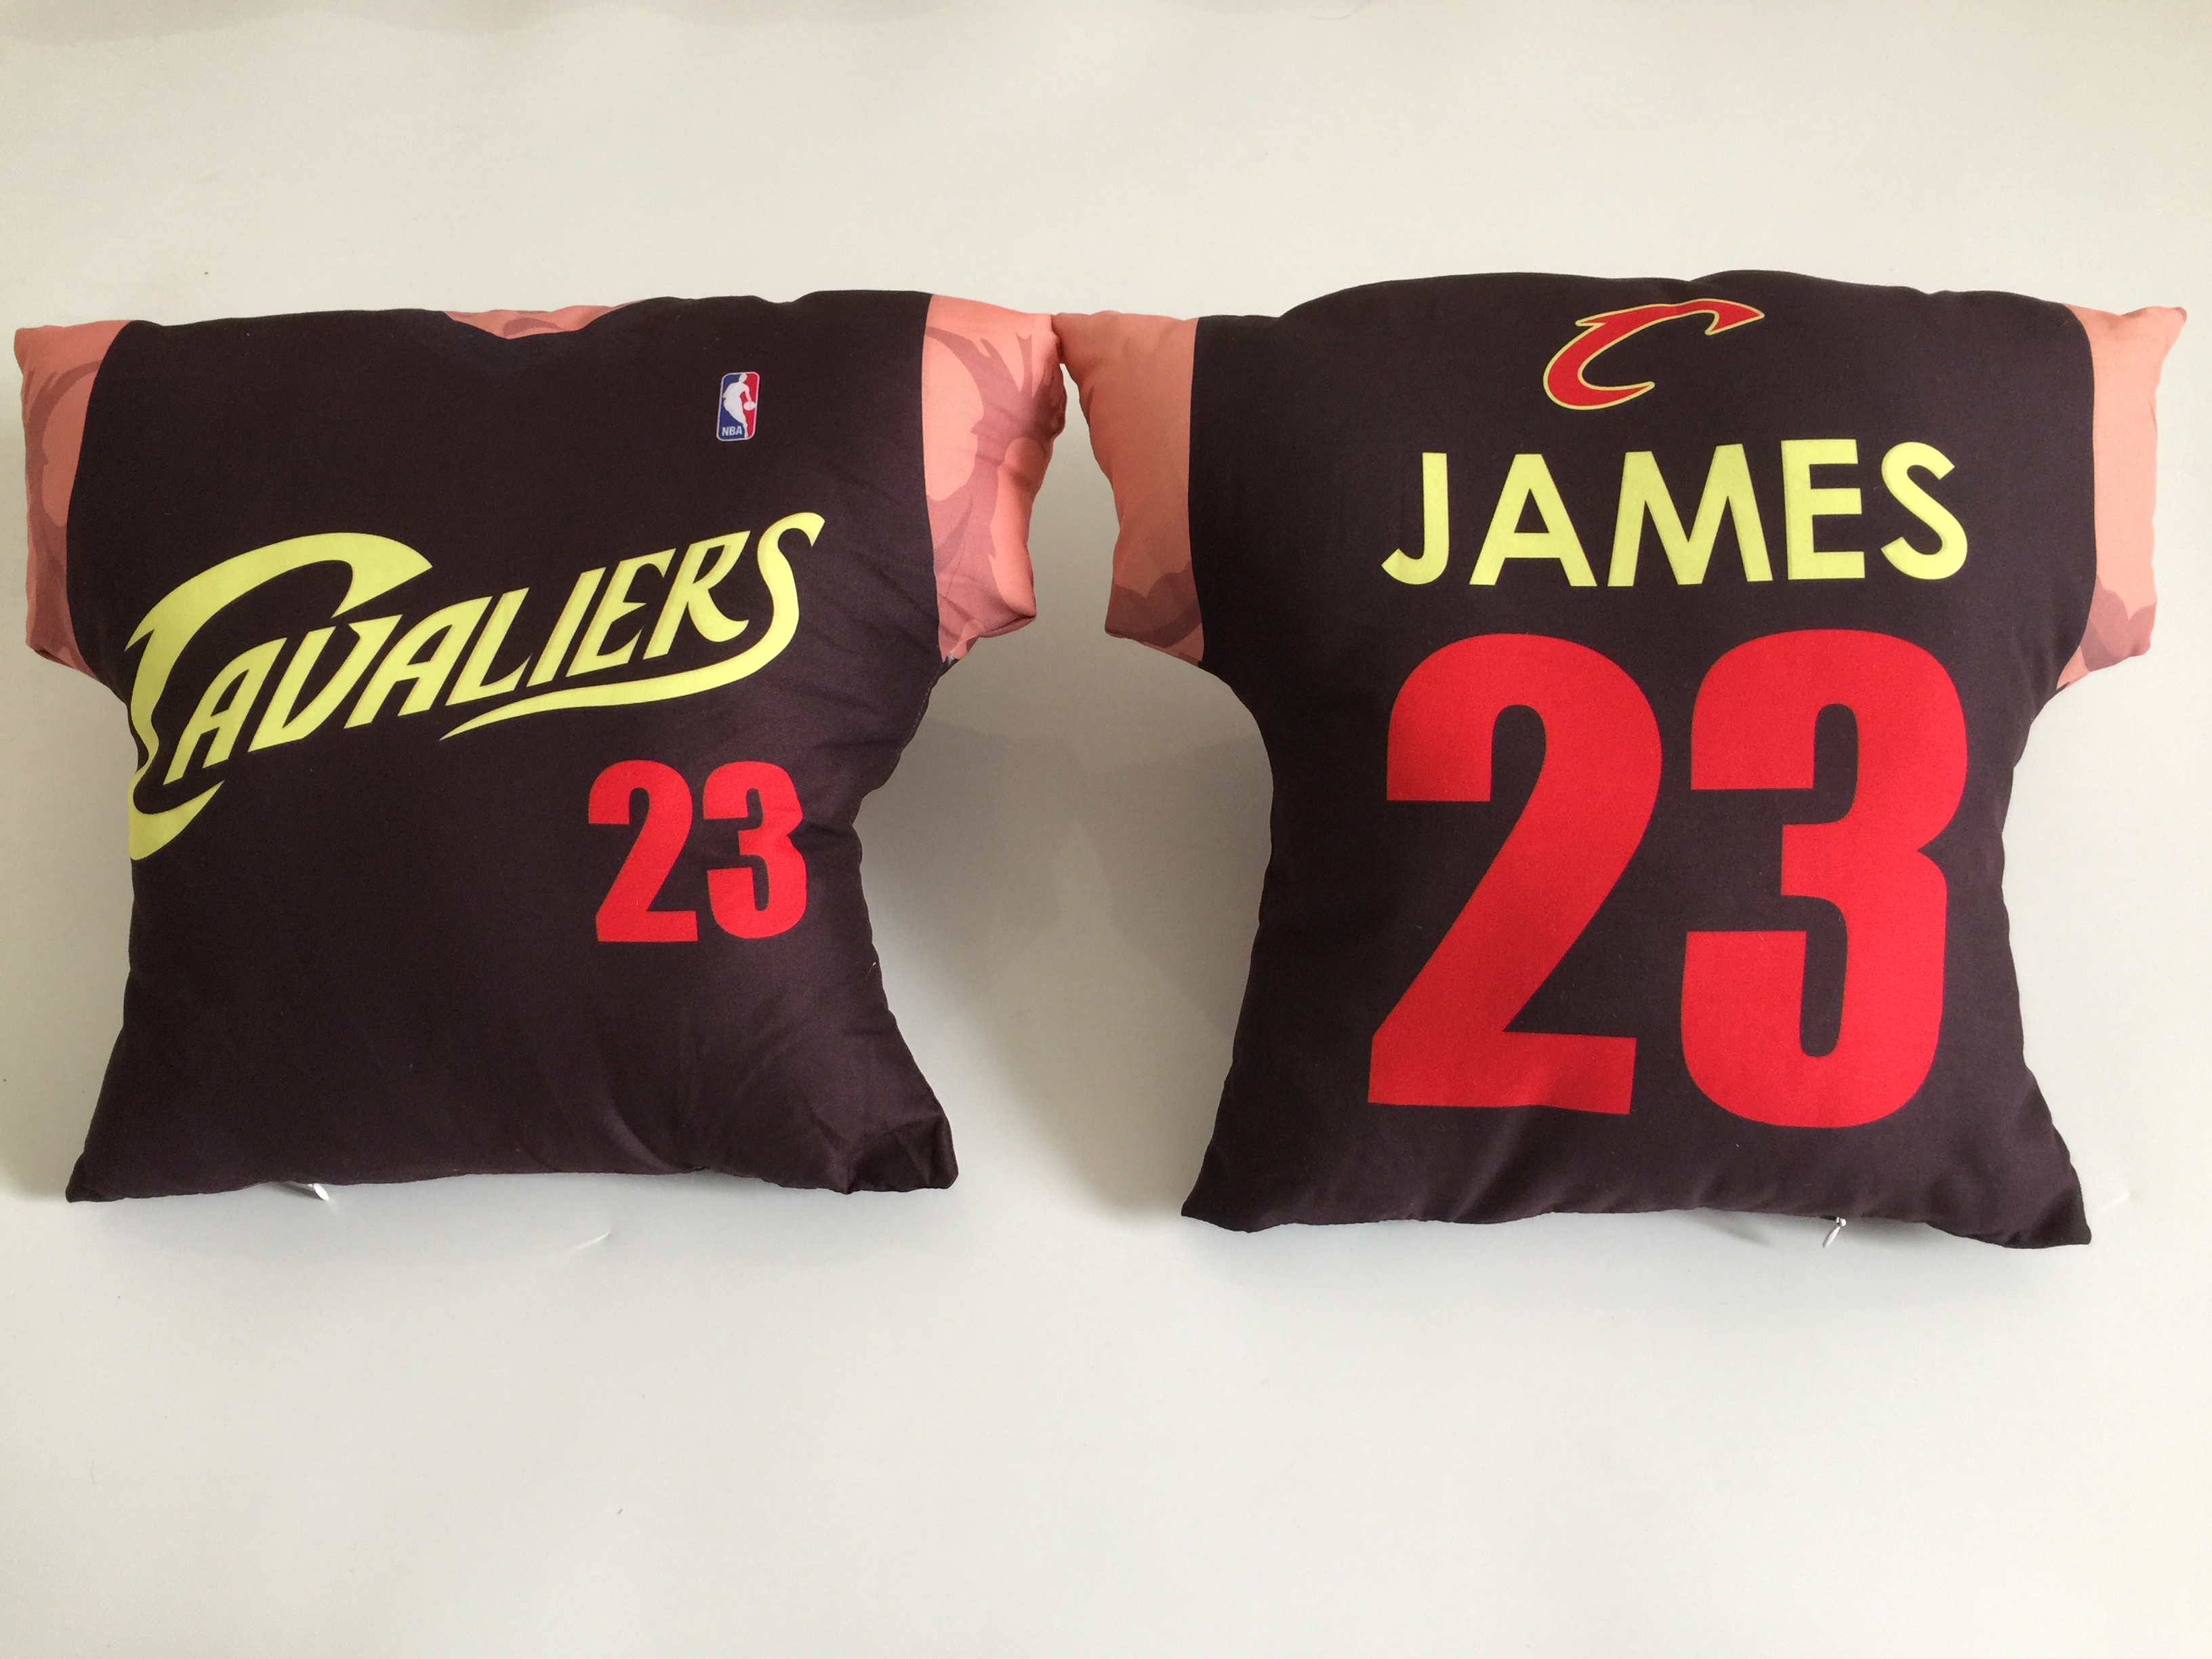 Cleveland Cavaliers 23 LeBron James Black NBA Pillow